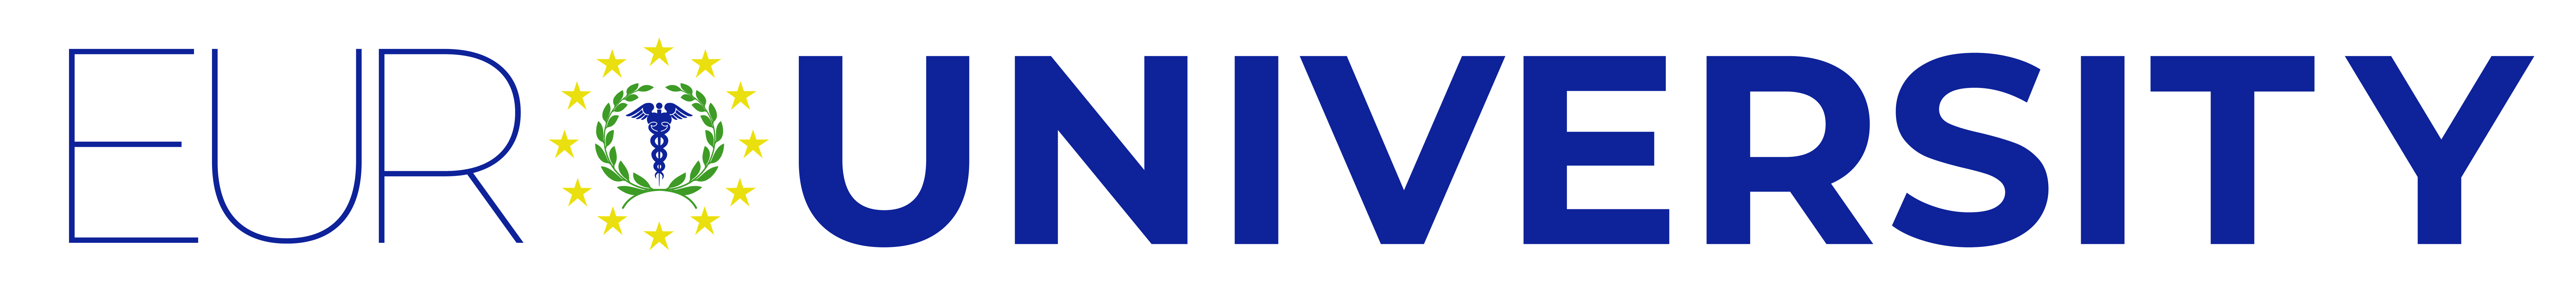 Logo Eurouniversity